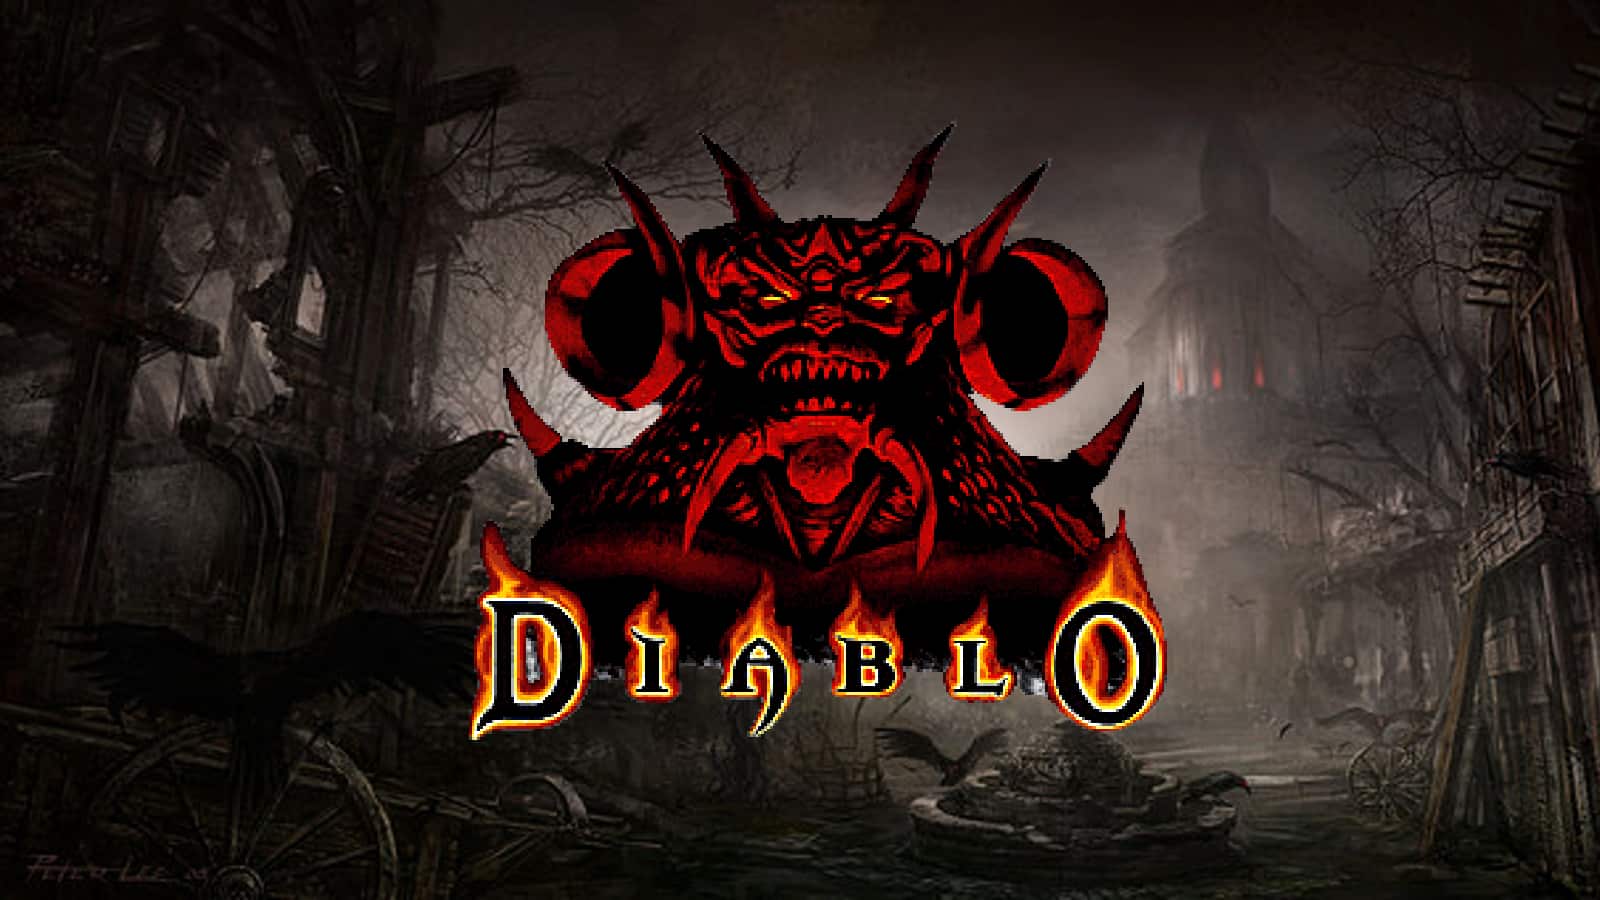 tristram and diablo logo